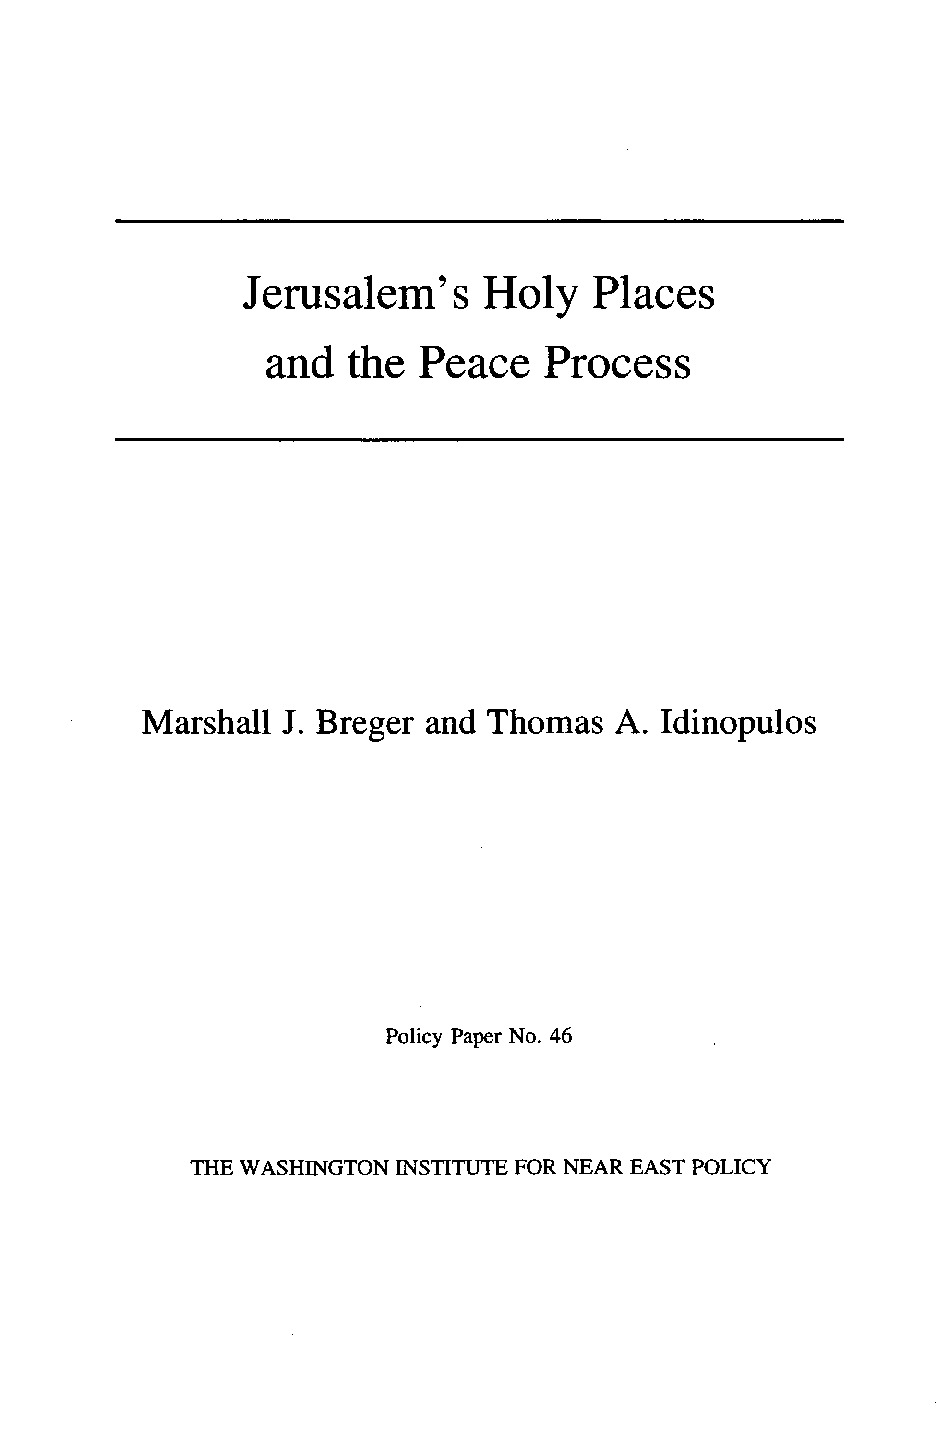 PP_46_JERUSALEMS_HOLY_PLACES.pdf